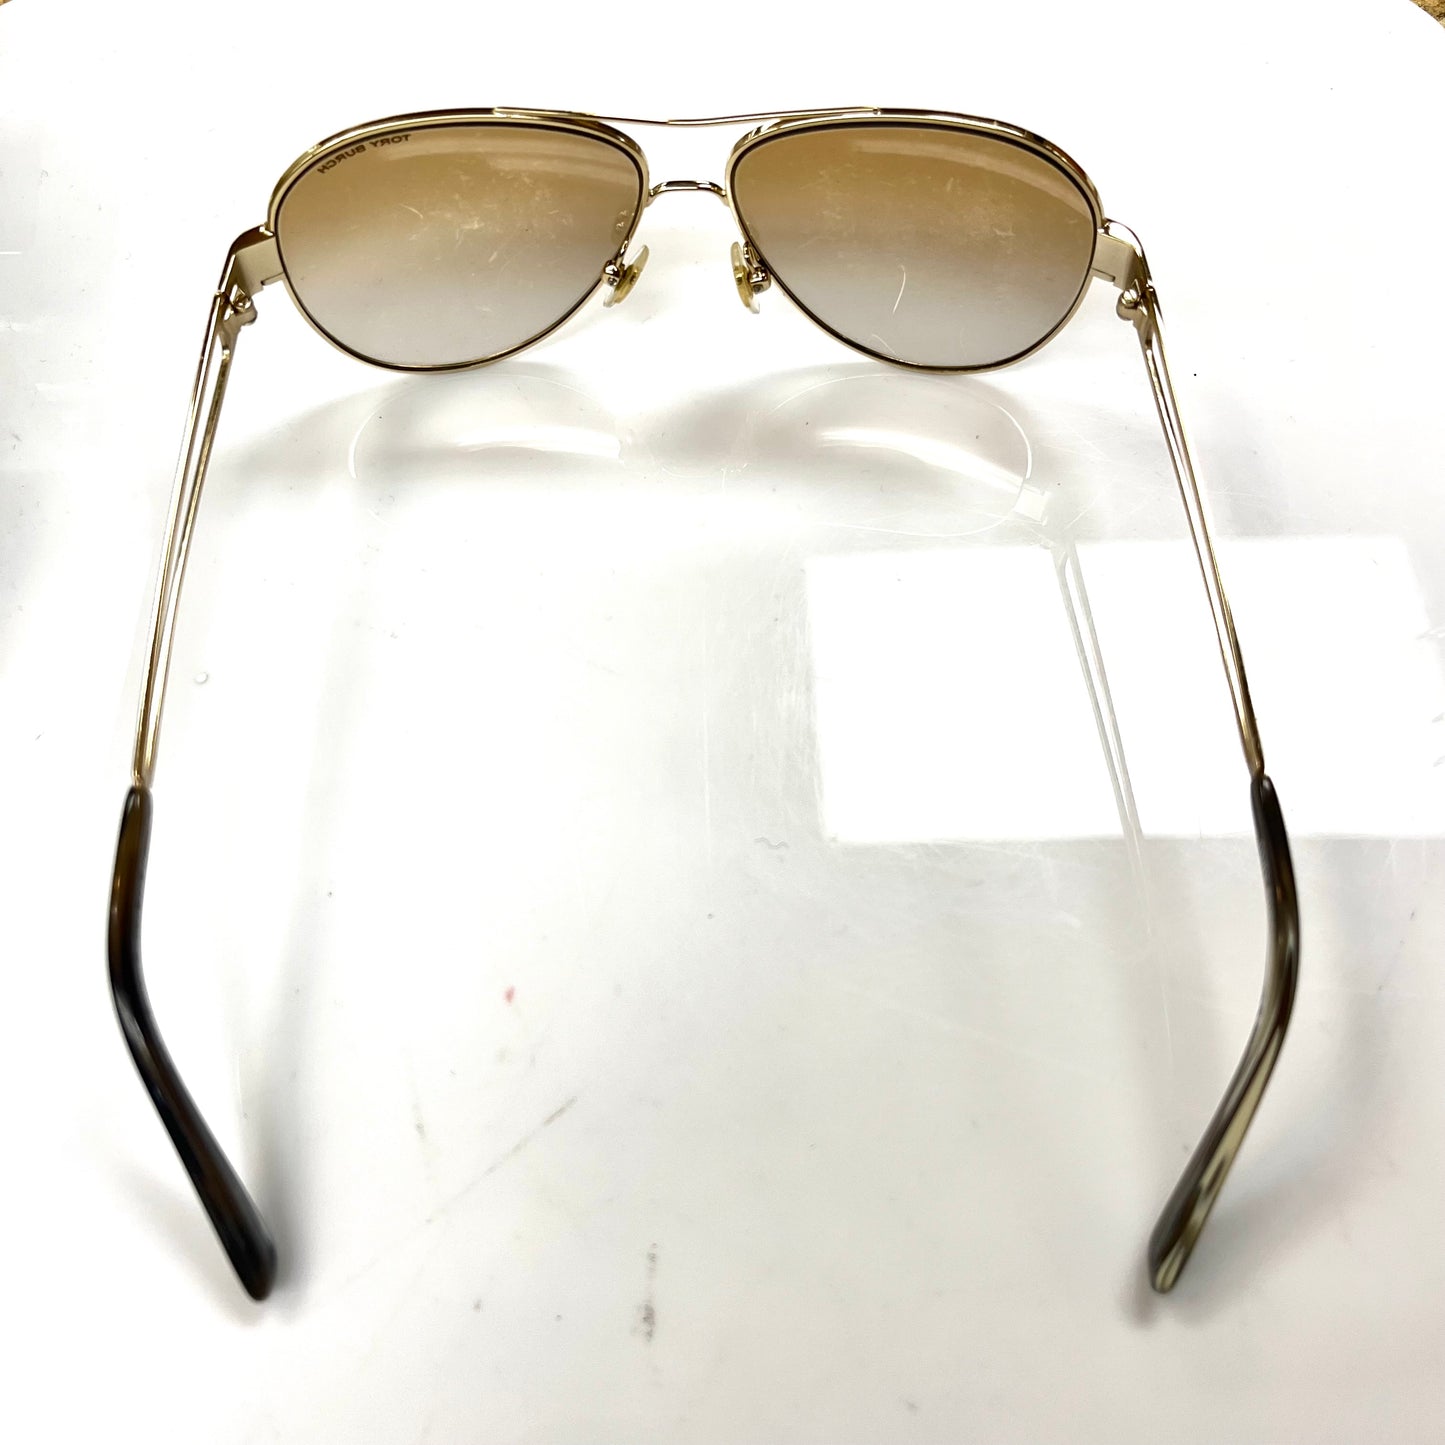 Sunglasses Designer By Tory Burch